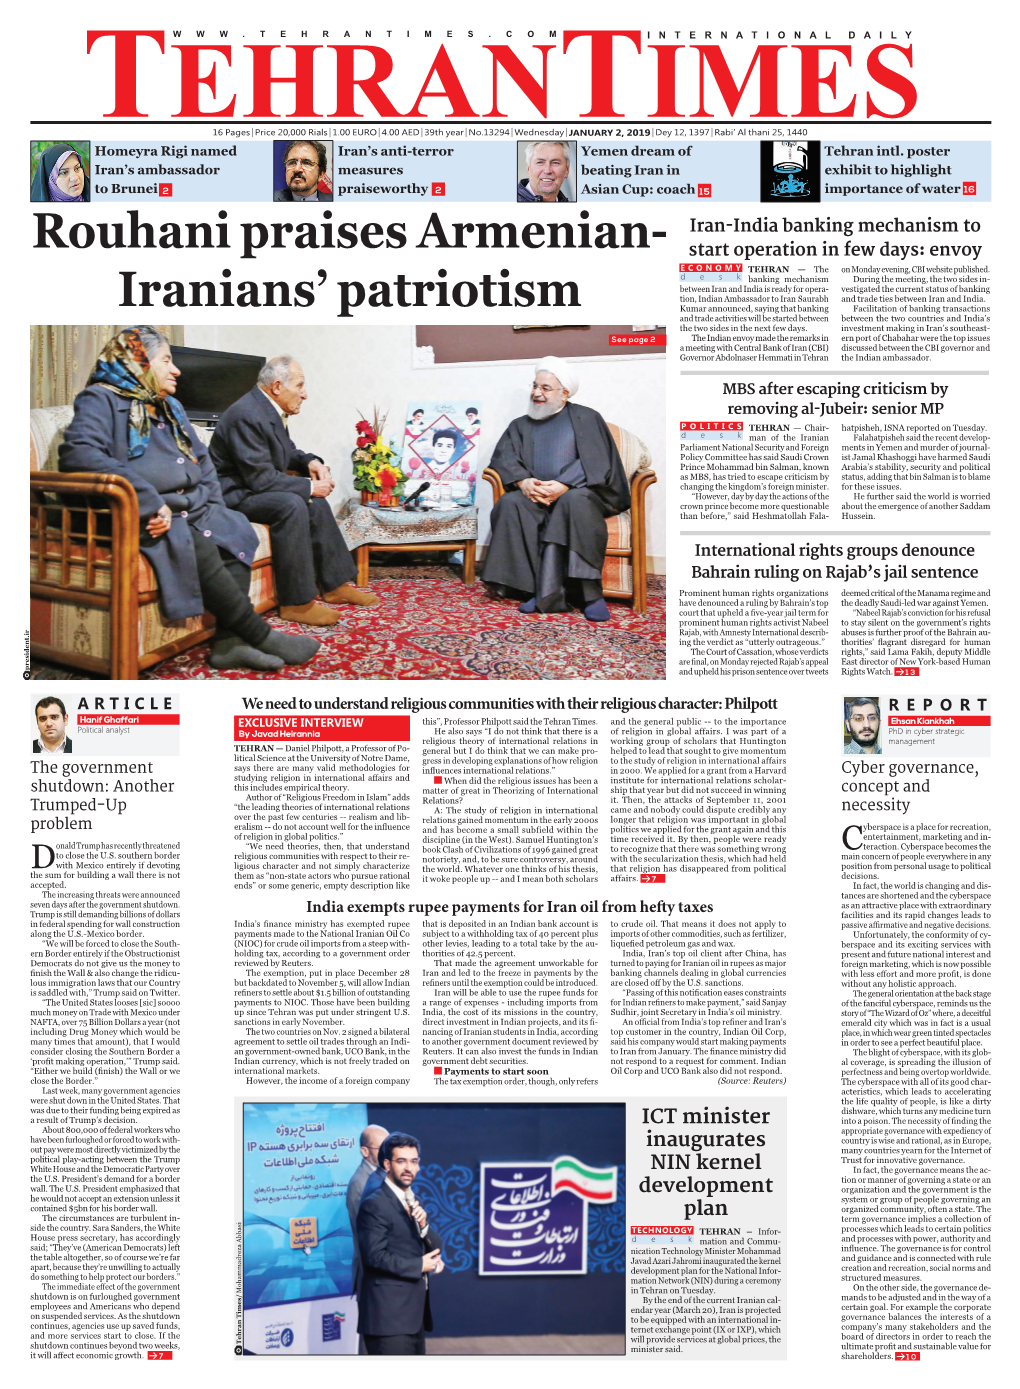 Rouhani Praises Armenian- Iranians' Patriotism